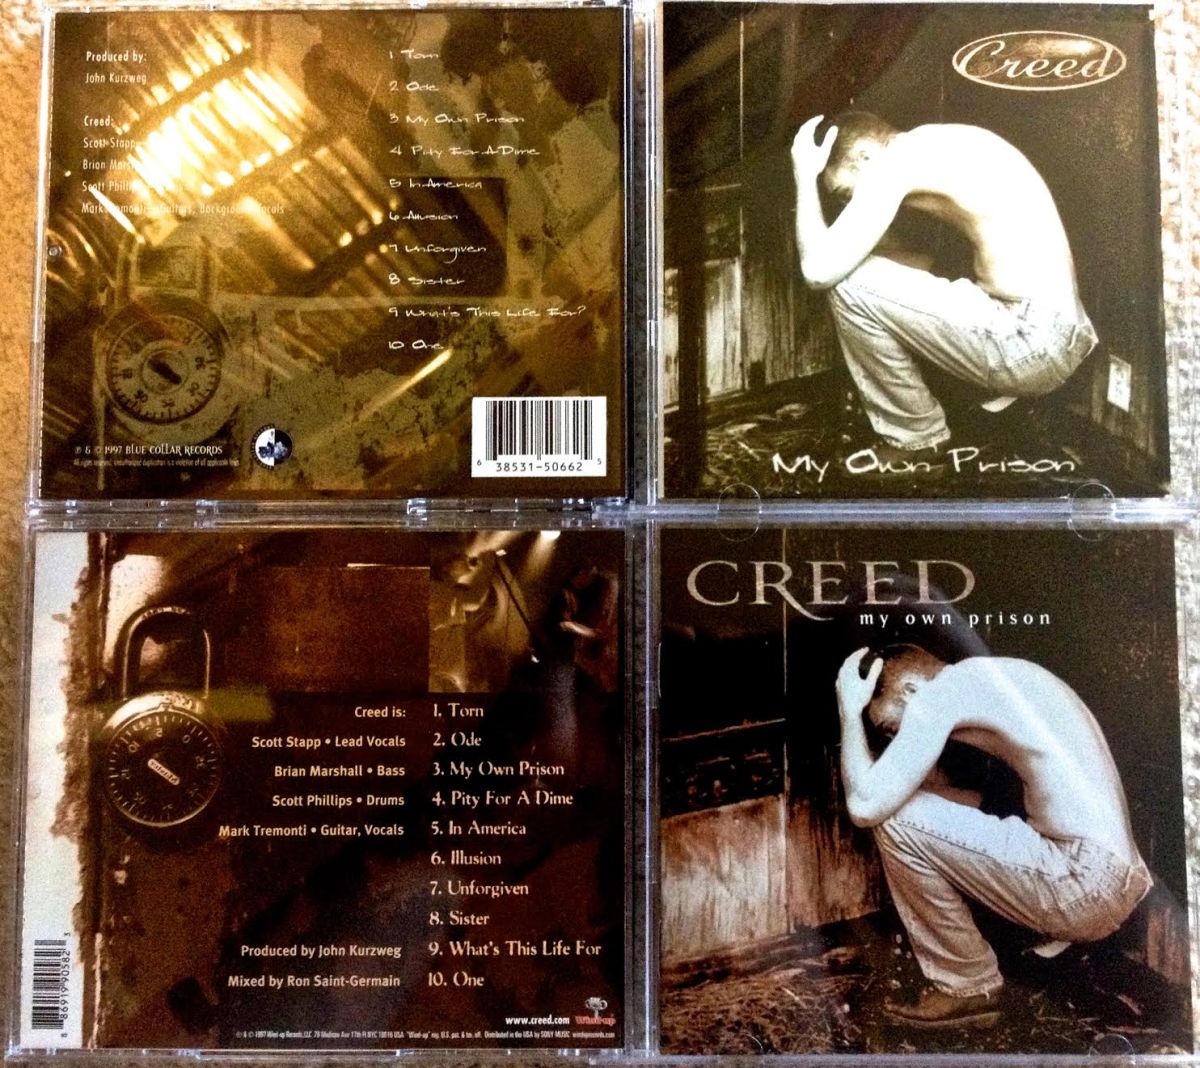 Creed  My Sacrifice   Creed lyrics, Great song lyrics, Nickelback lyrics